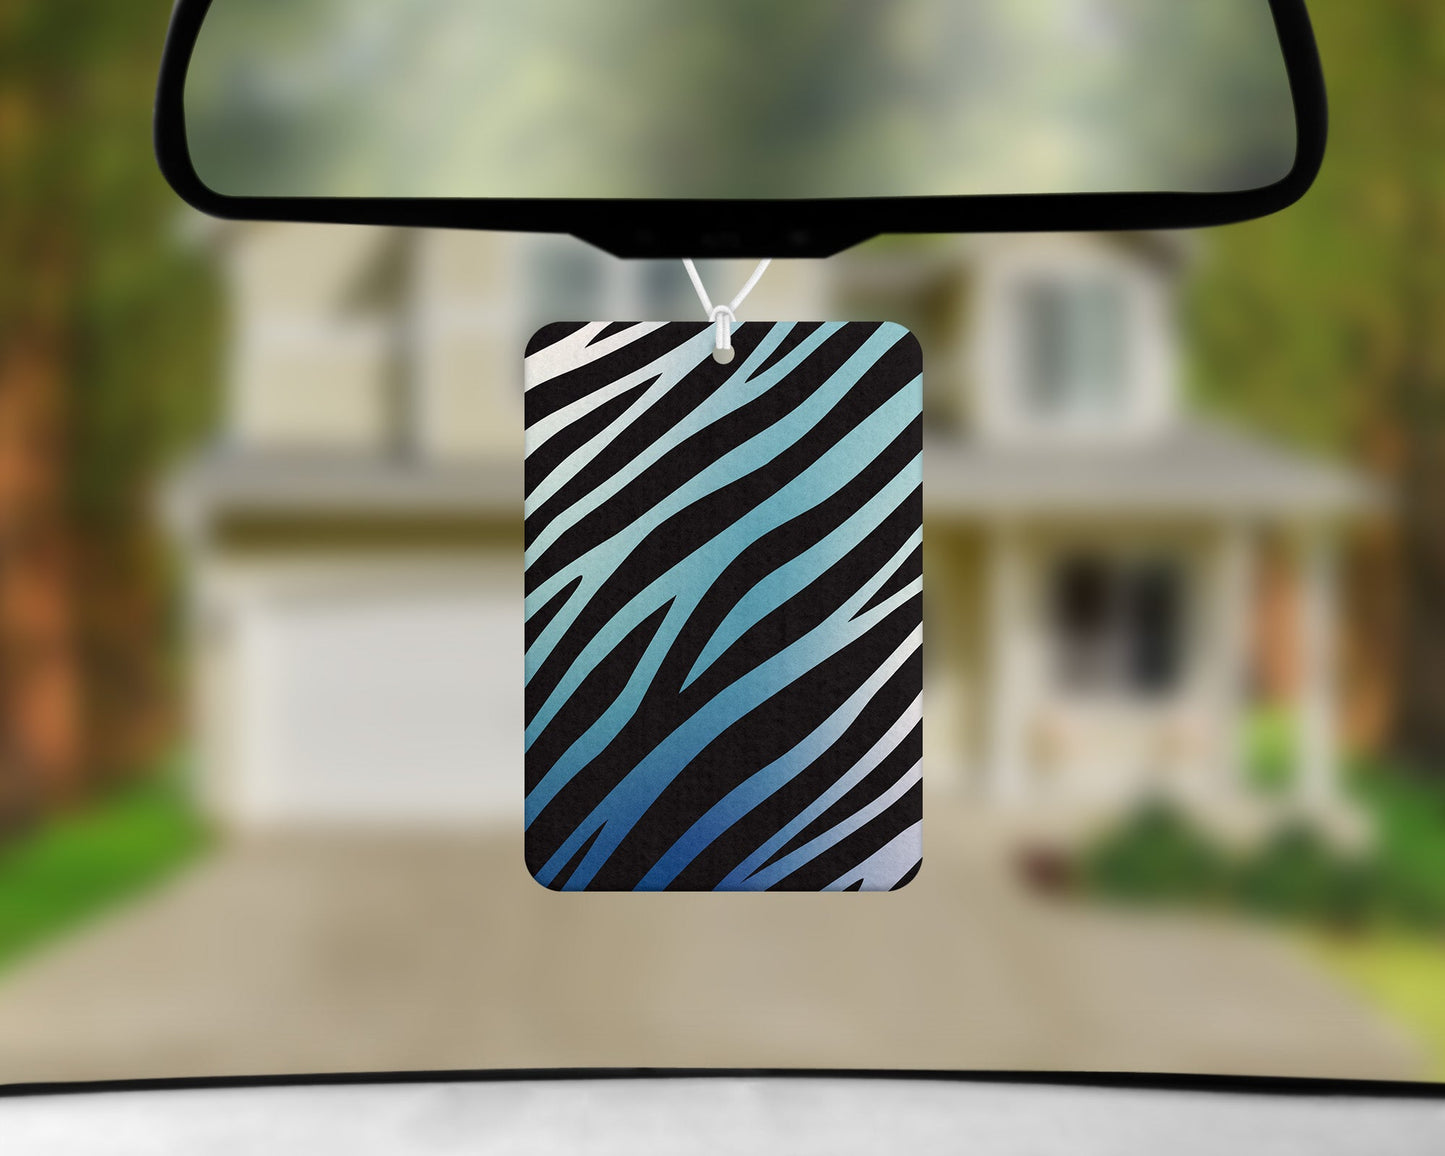 Zebra Stripes|Freshie|Includes Scent Bottle - Vehicle Air Freshener